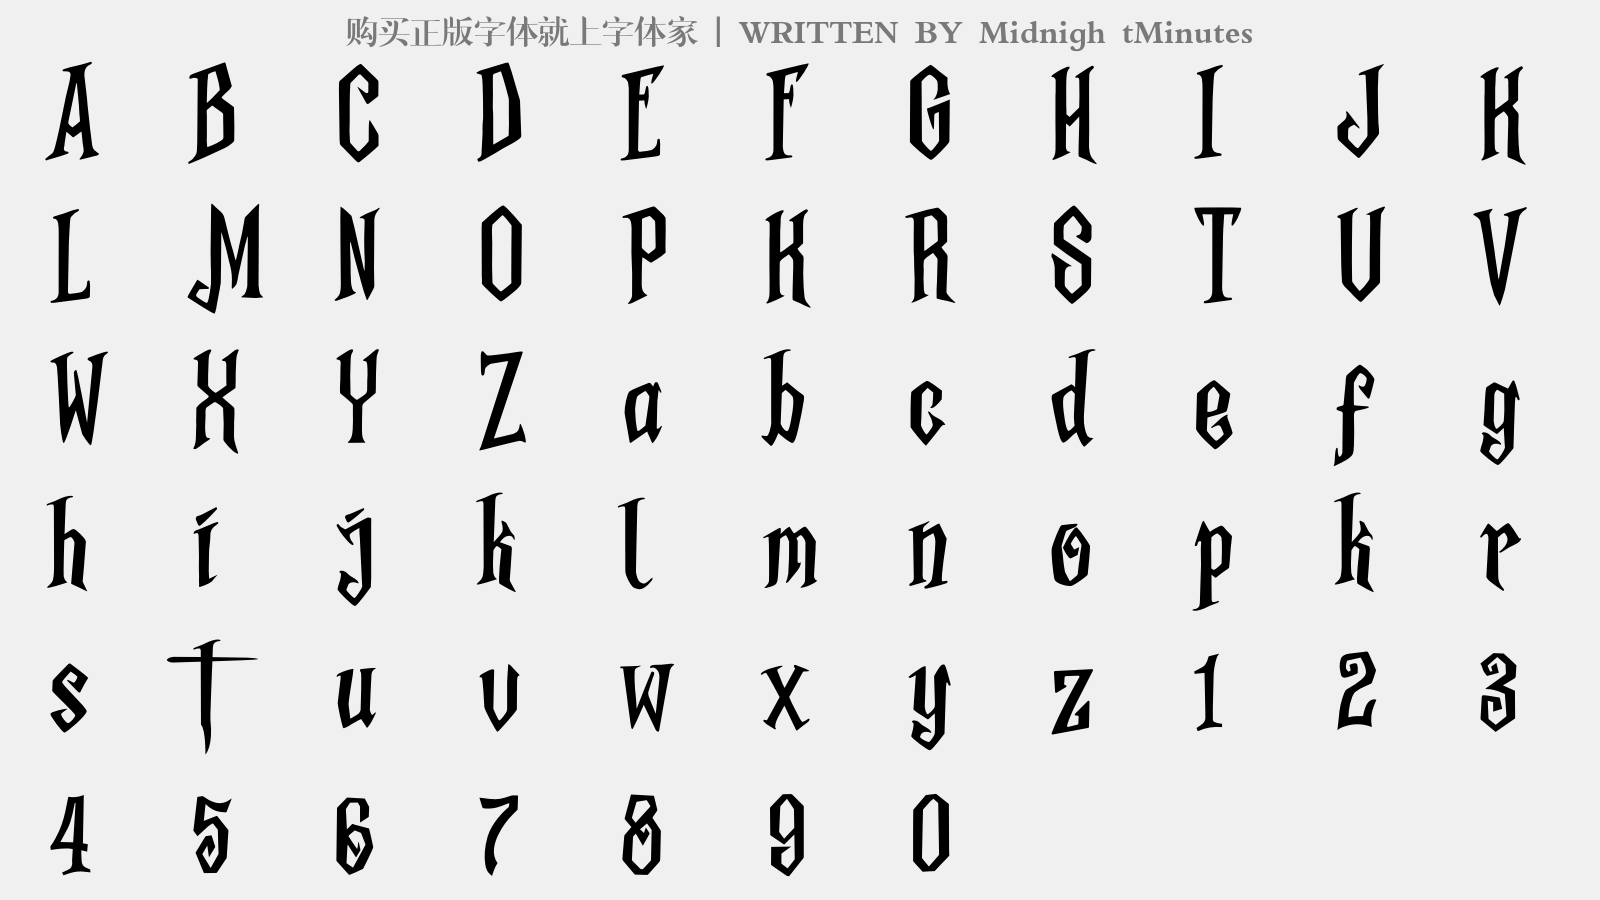 Midnigh tMinutes - 大写字母/小写字母/数字